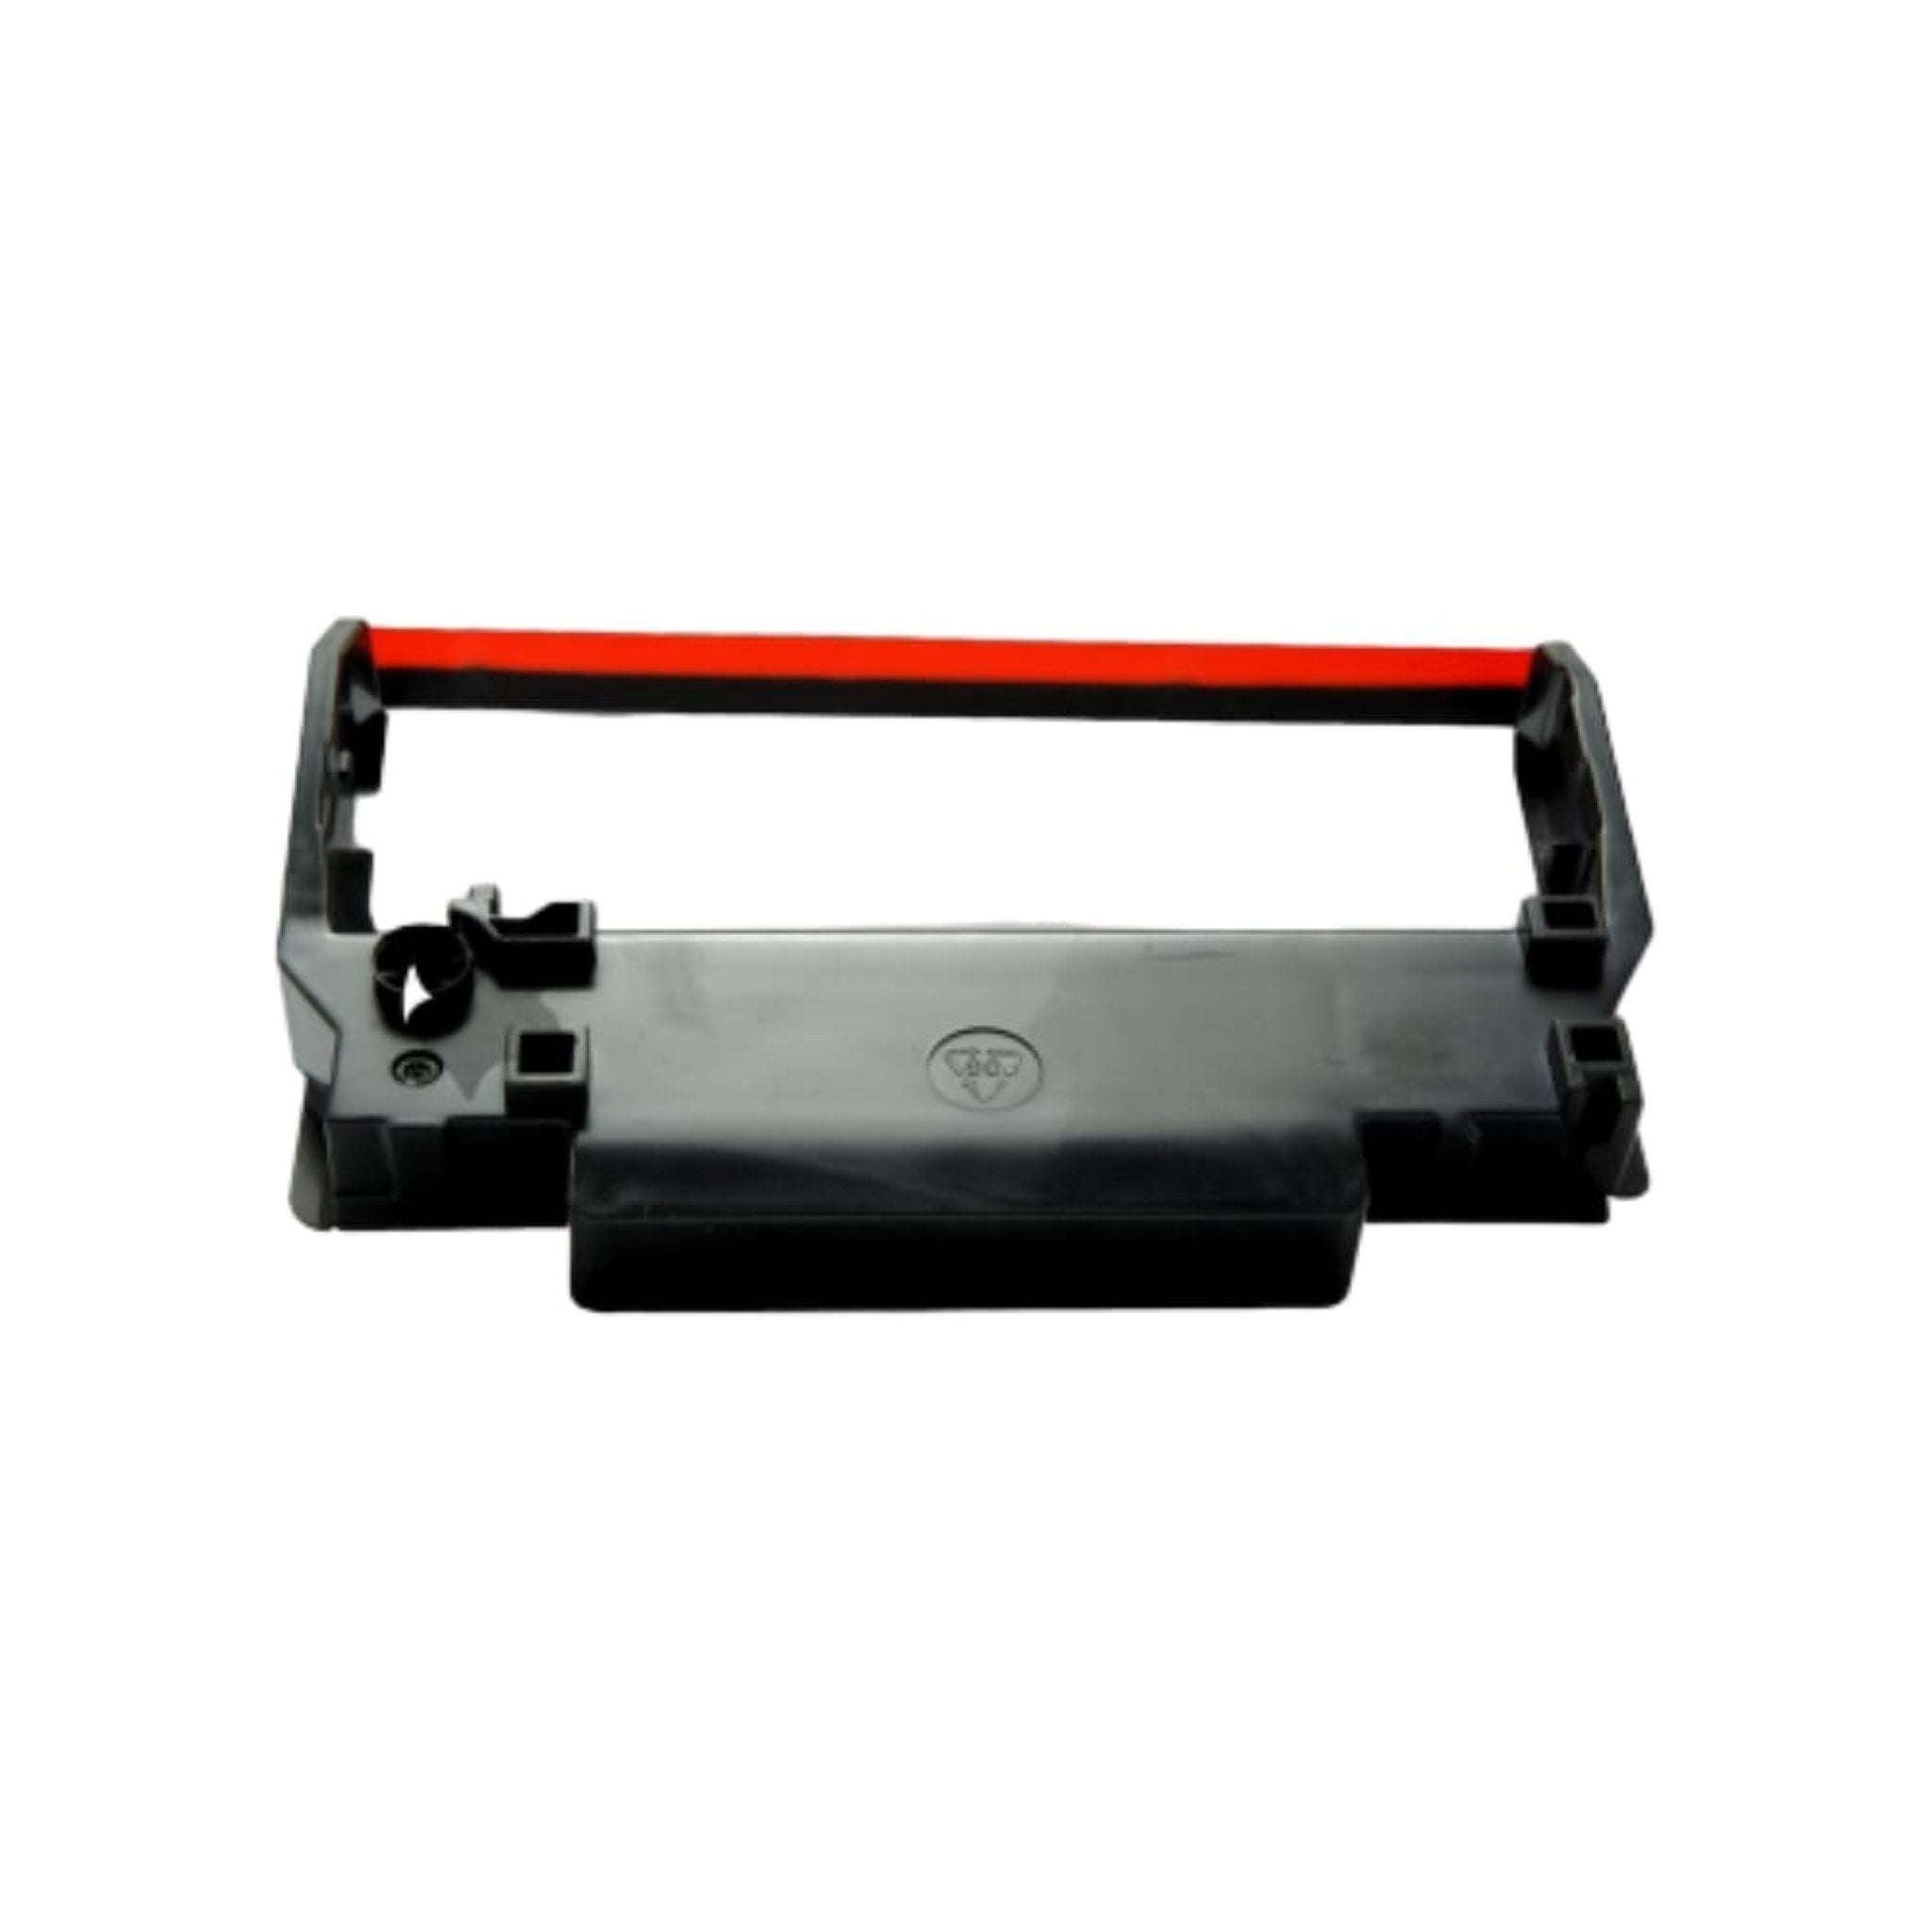  myCartridge ERC30 ERC30 ERC-30 ERC/30/34/38 B/R Compatible  Ribbon Cartridge for use in ERC38 NK506 Printer (Black Red, 12-Pack) ERC30  : Office Products